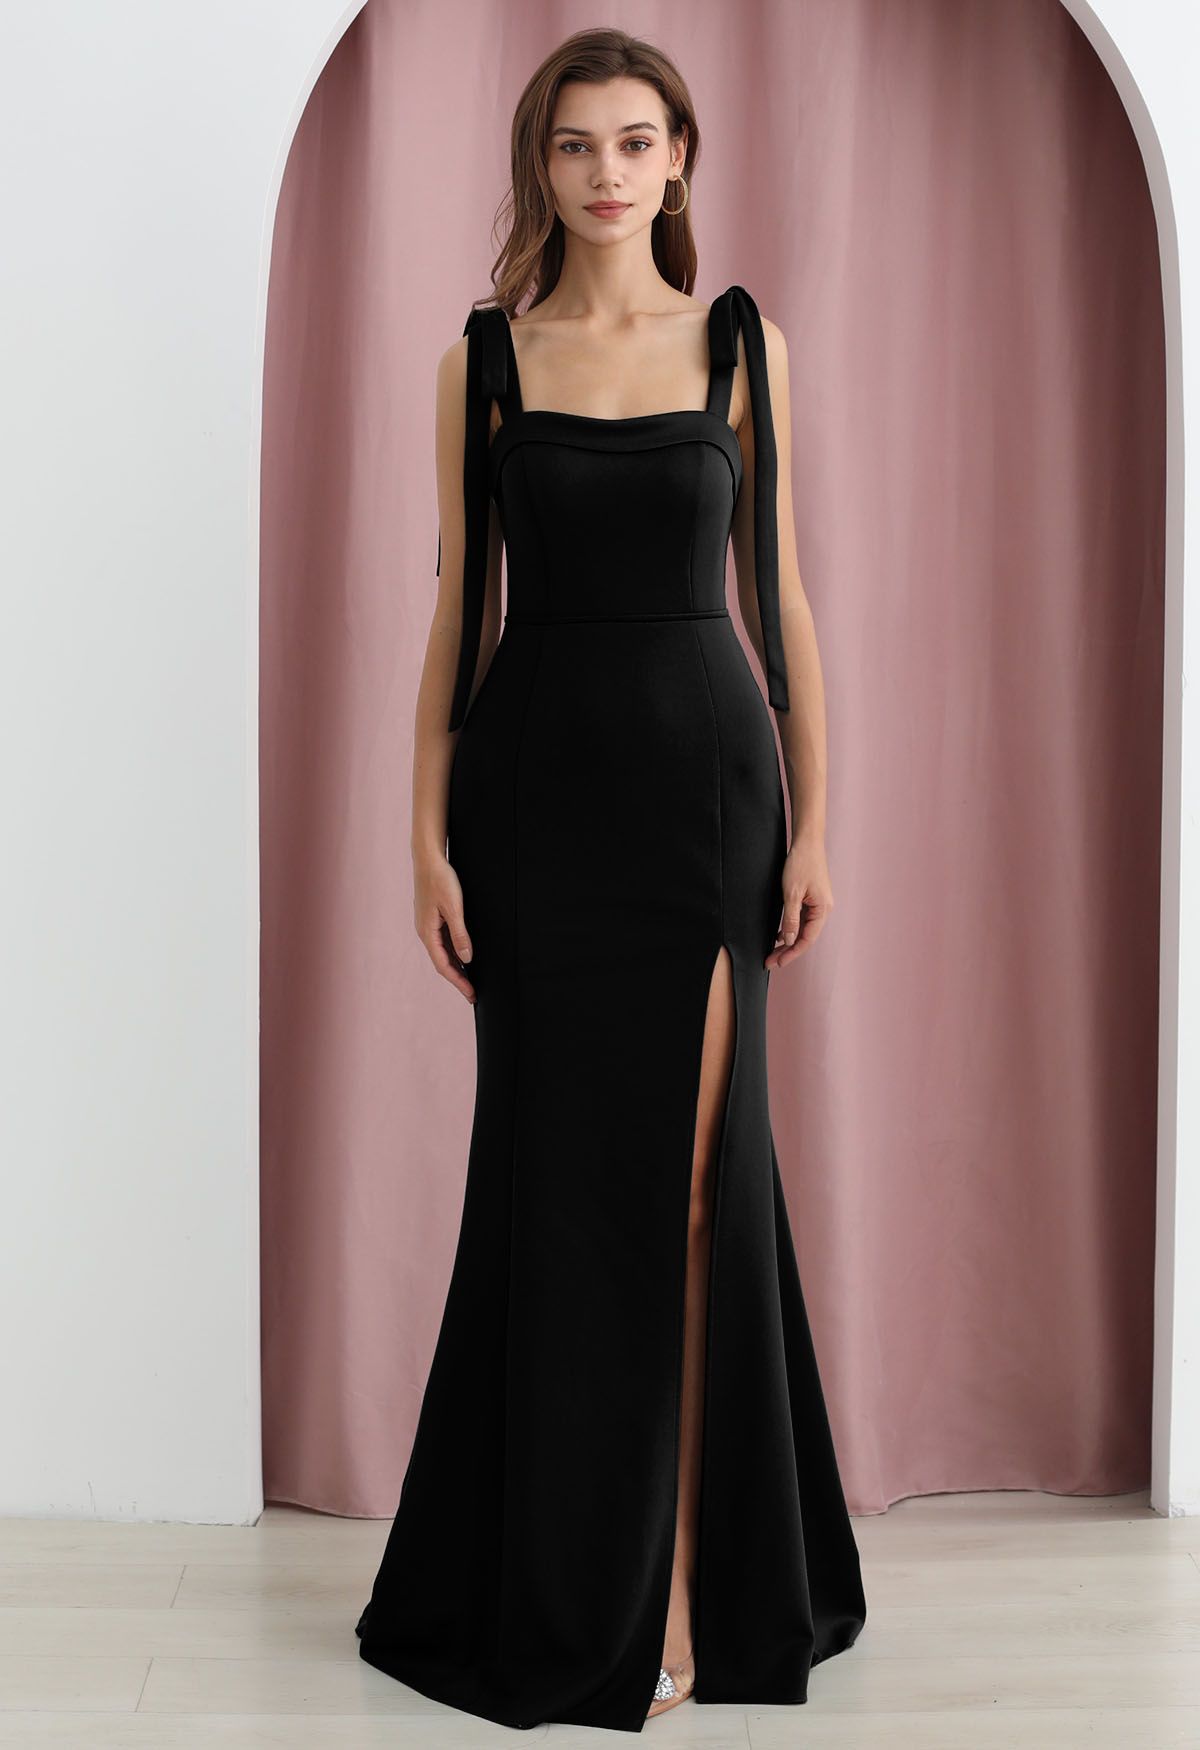 Tie-Shoulder High Slit Maxi Gown in Black - Retro, Indie and Unique Fashion